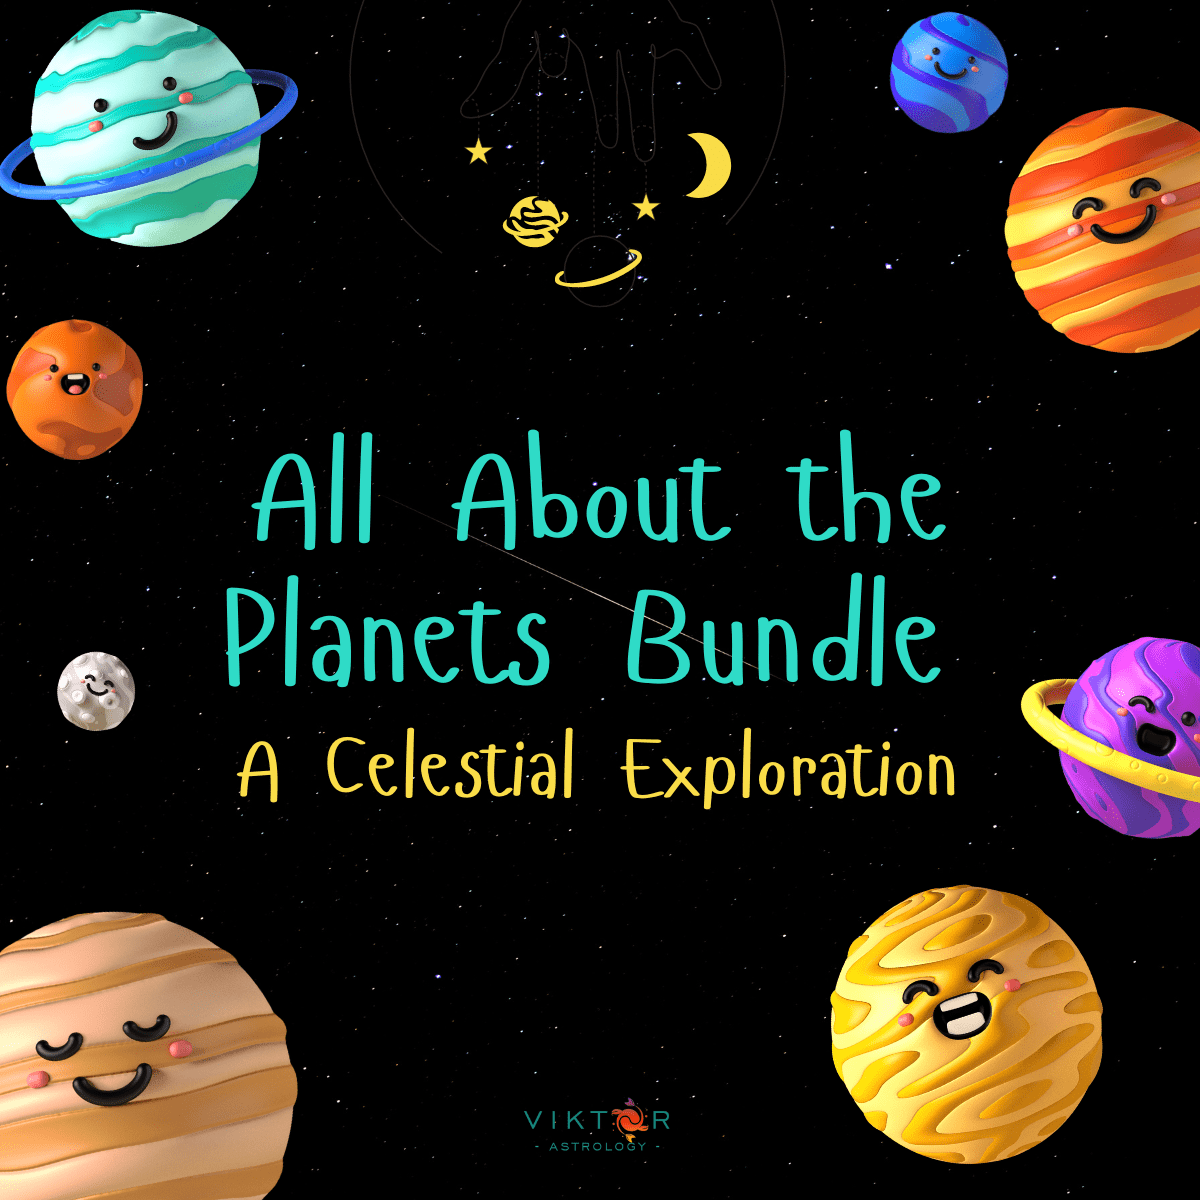 All About the Planets Bundle A Celestial Exploration